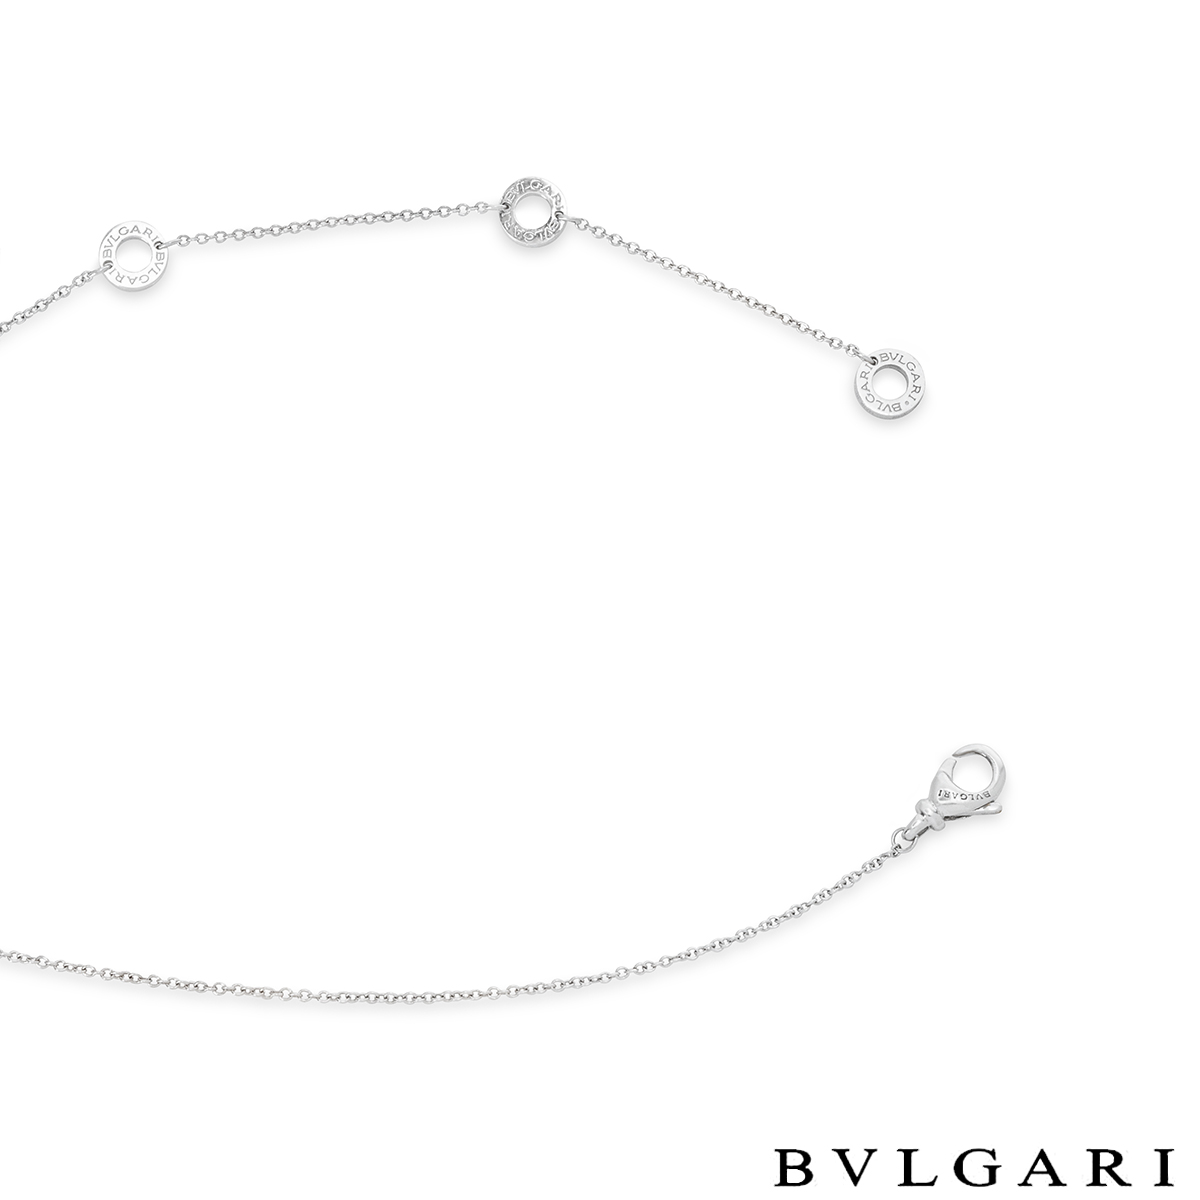 Bvlgari White Gold Diamond Corona Necklace 1.02ct H/IF